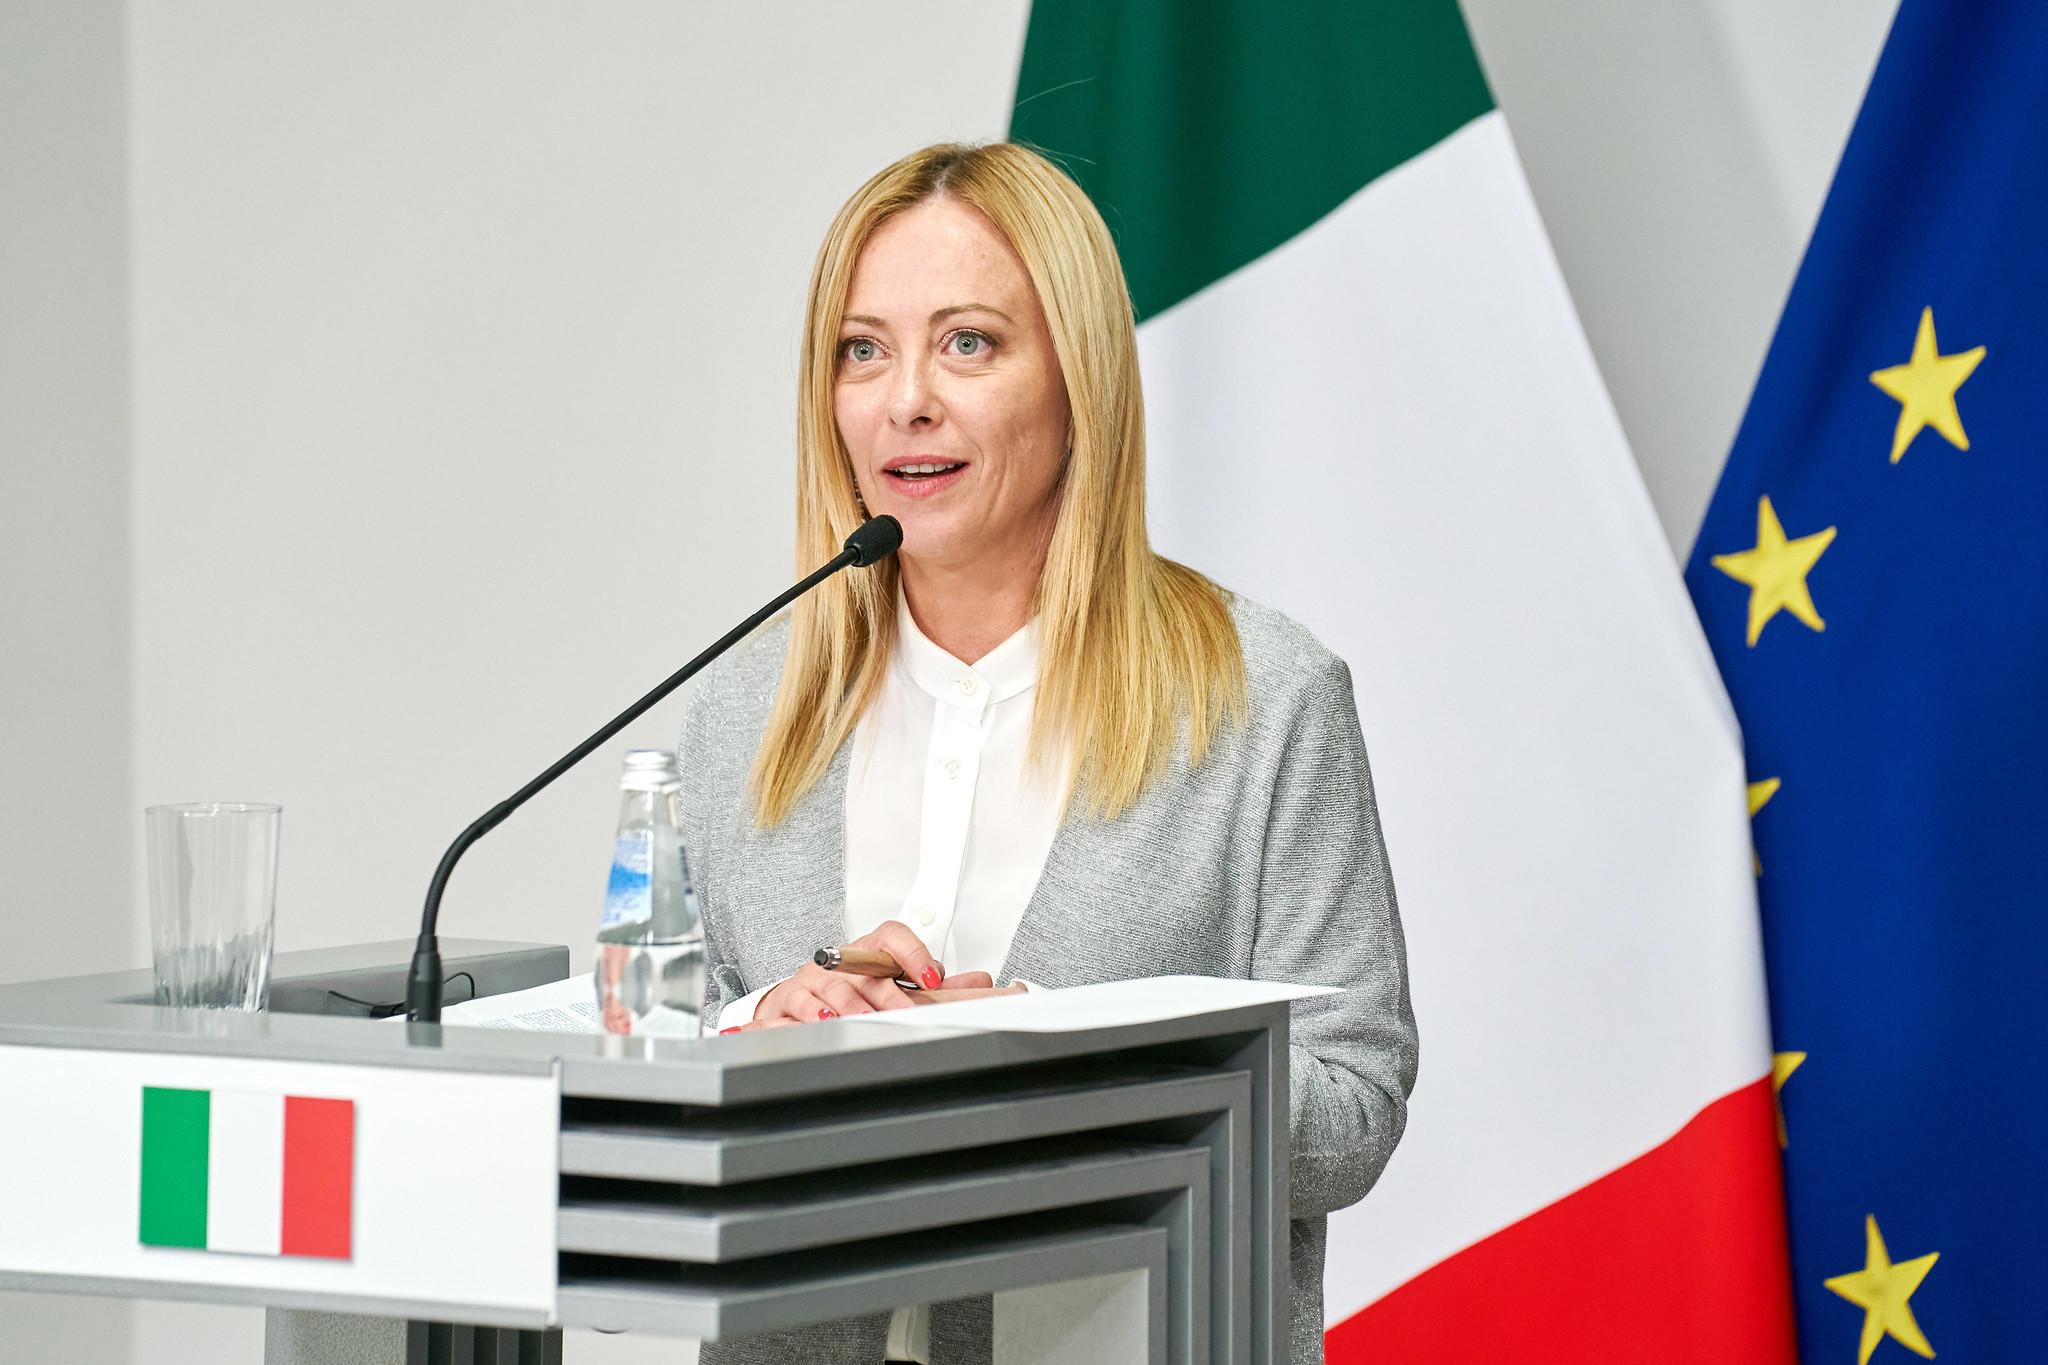 PM Giorgia Meloni